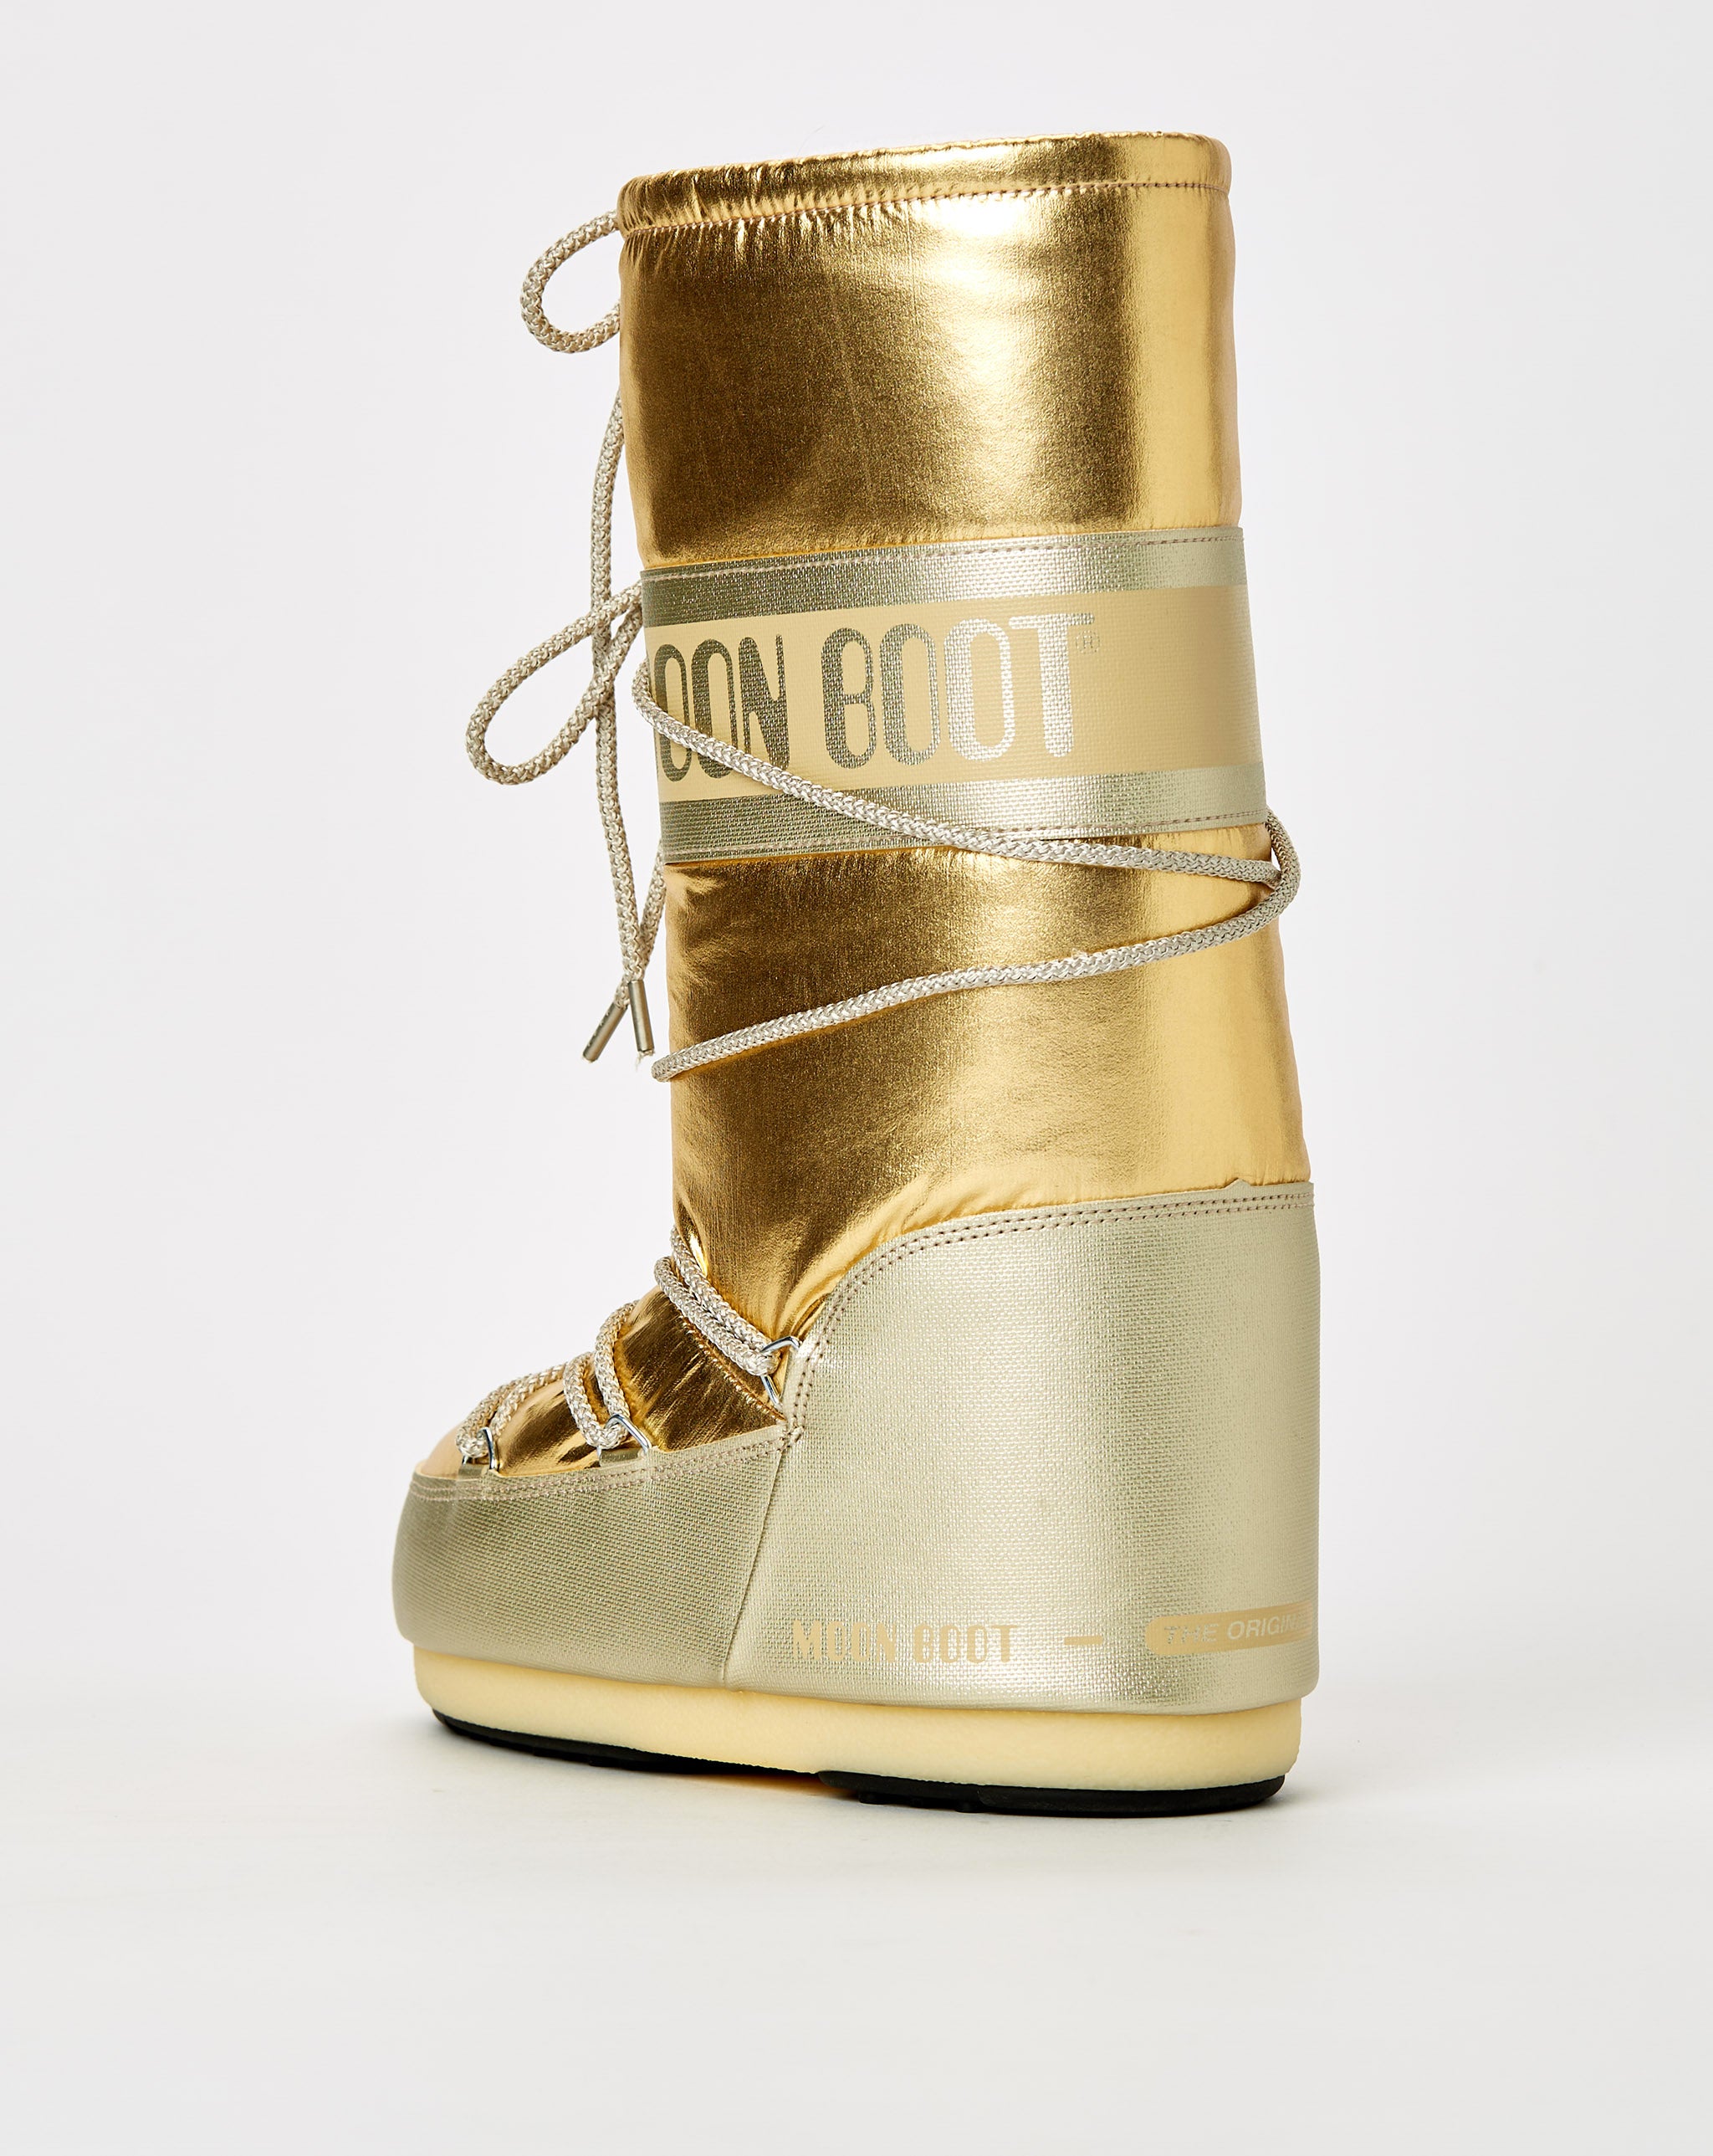 Moon Boot Women's Nike Daybreak 70's Type Sneakers Metallic  - Cheap Erlebniswelt-fliegenfischen Jordan outlet